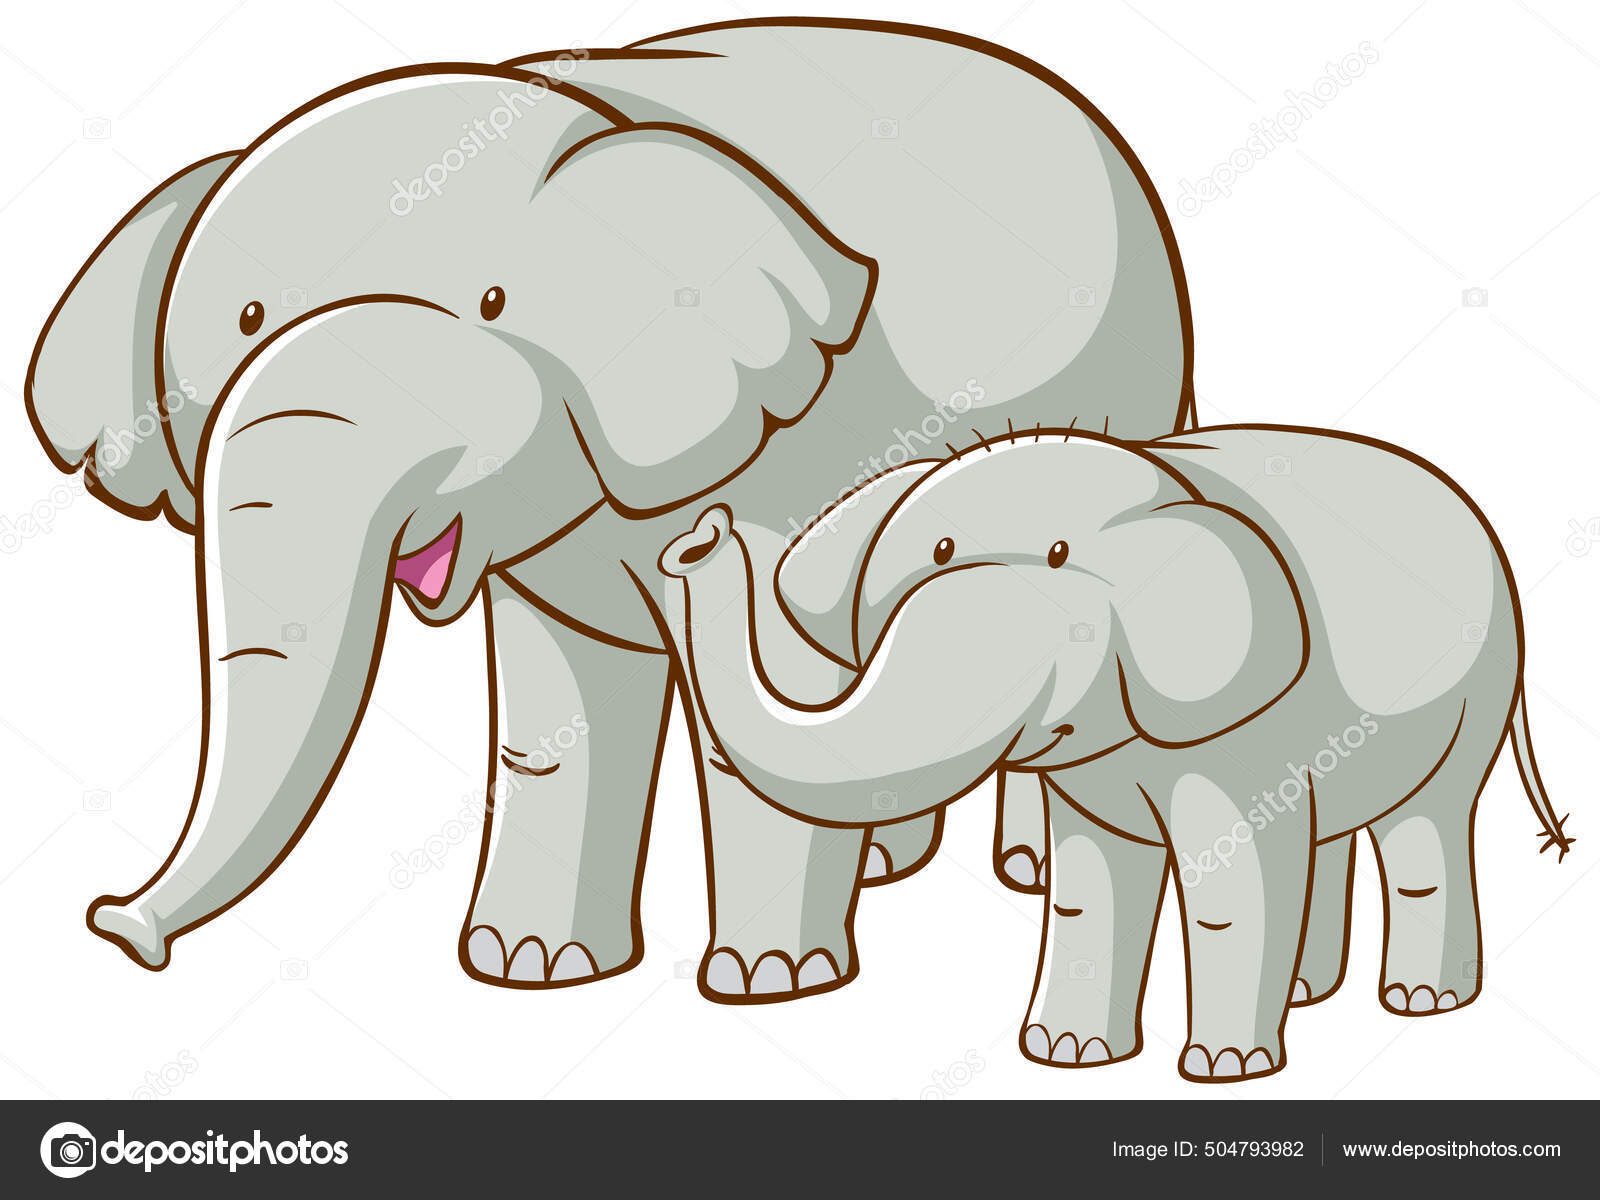 Big and small cartoon elephants. Vector clip art illustration with